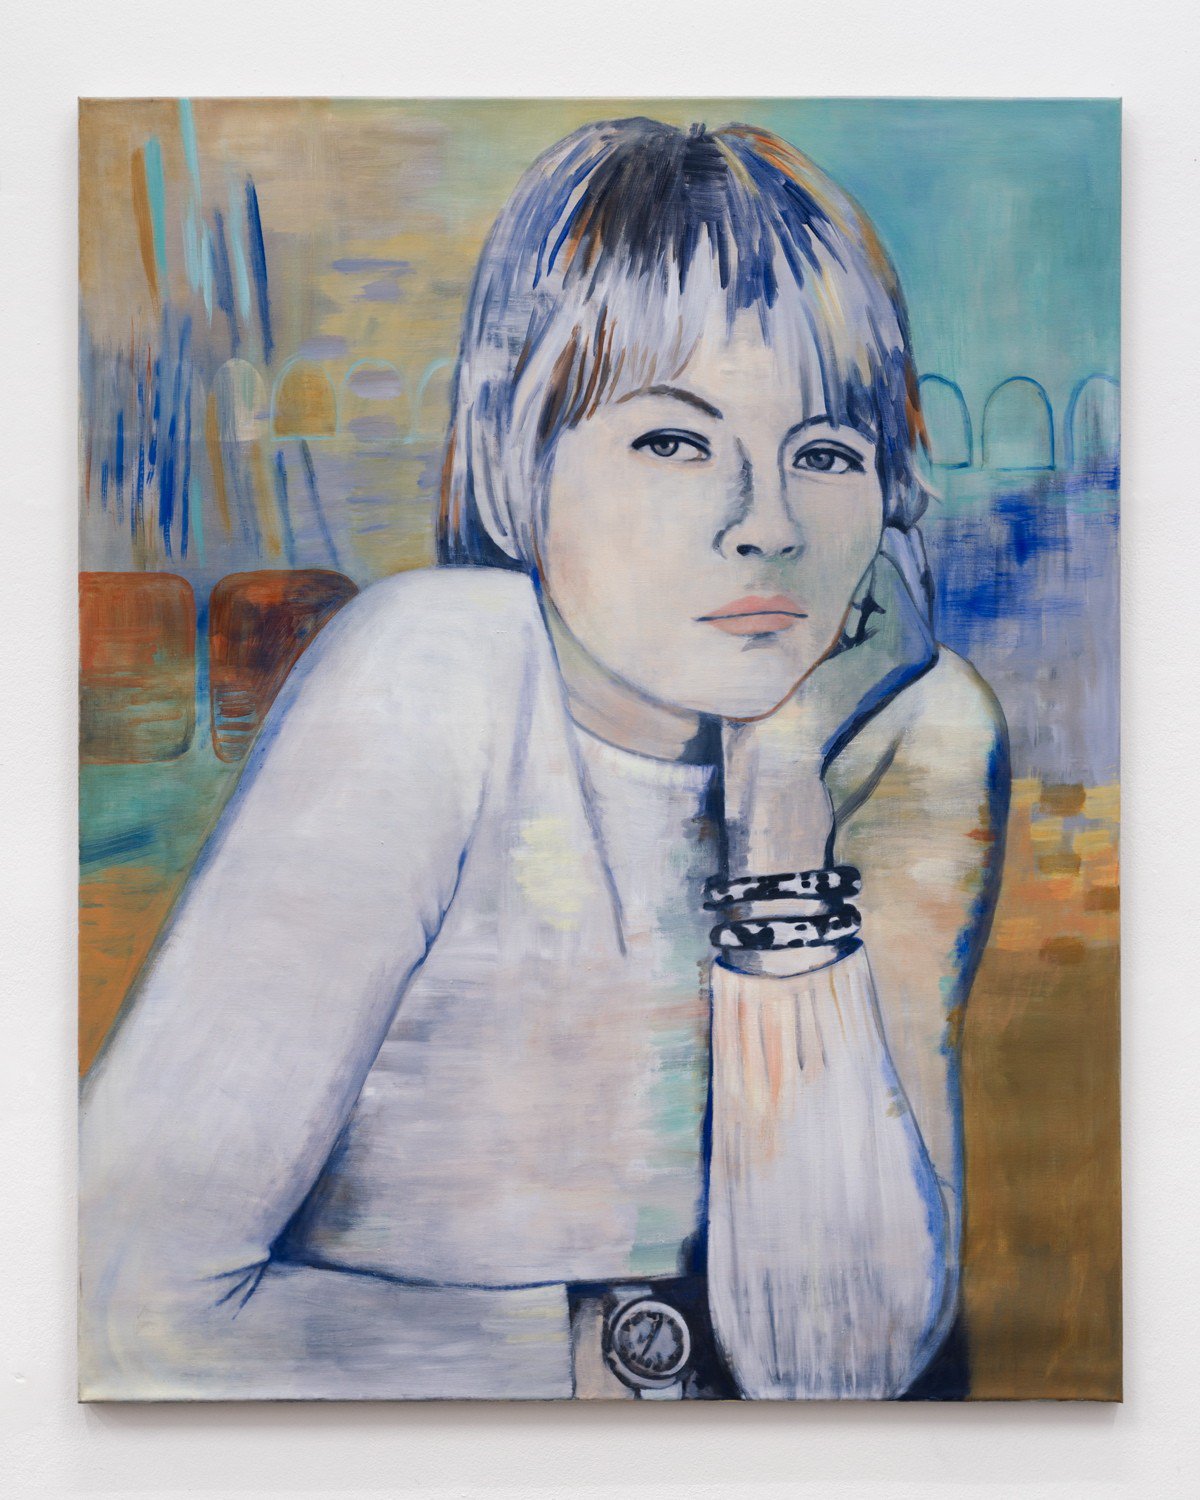 Birgit MegerleUntitled, 2015Oil on canvas150 x 120 cm